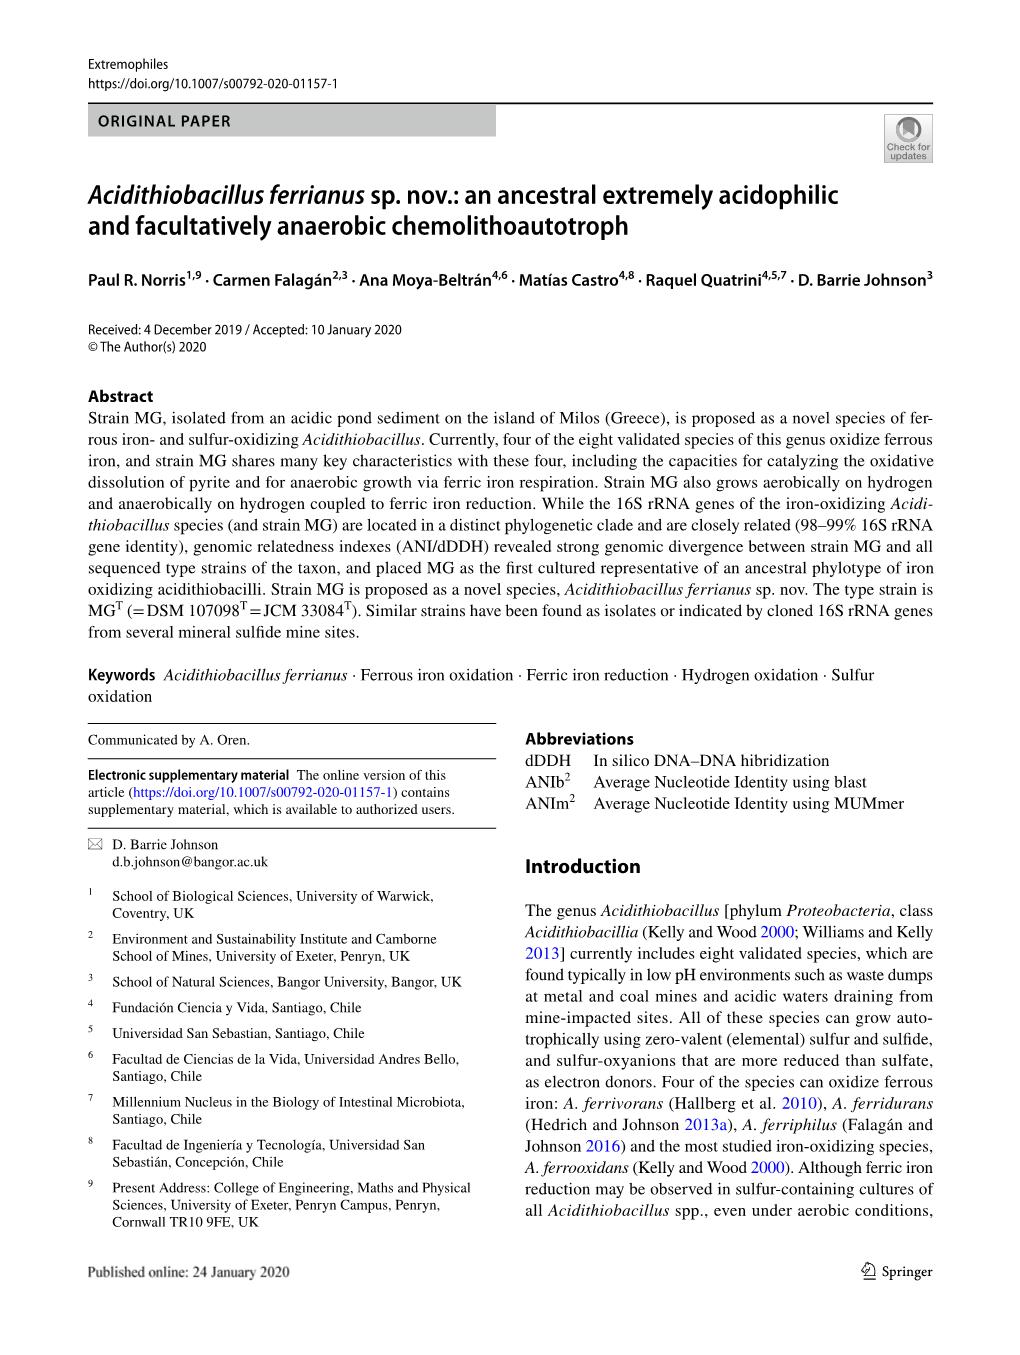 Acidithiobacillus Ferrianus Sp. Nov.: an Ancestral Extremely Acidophilic and Facultatively Anaerobic Chemolithoautotroph